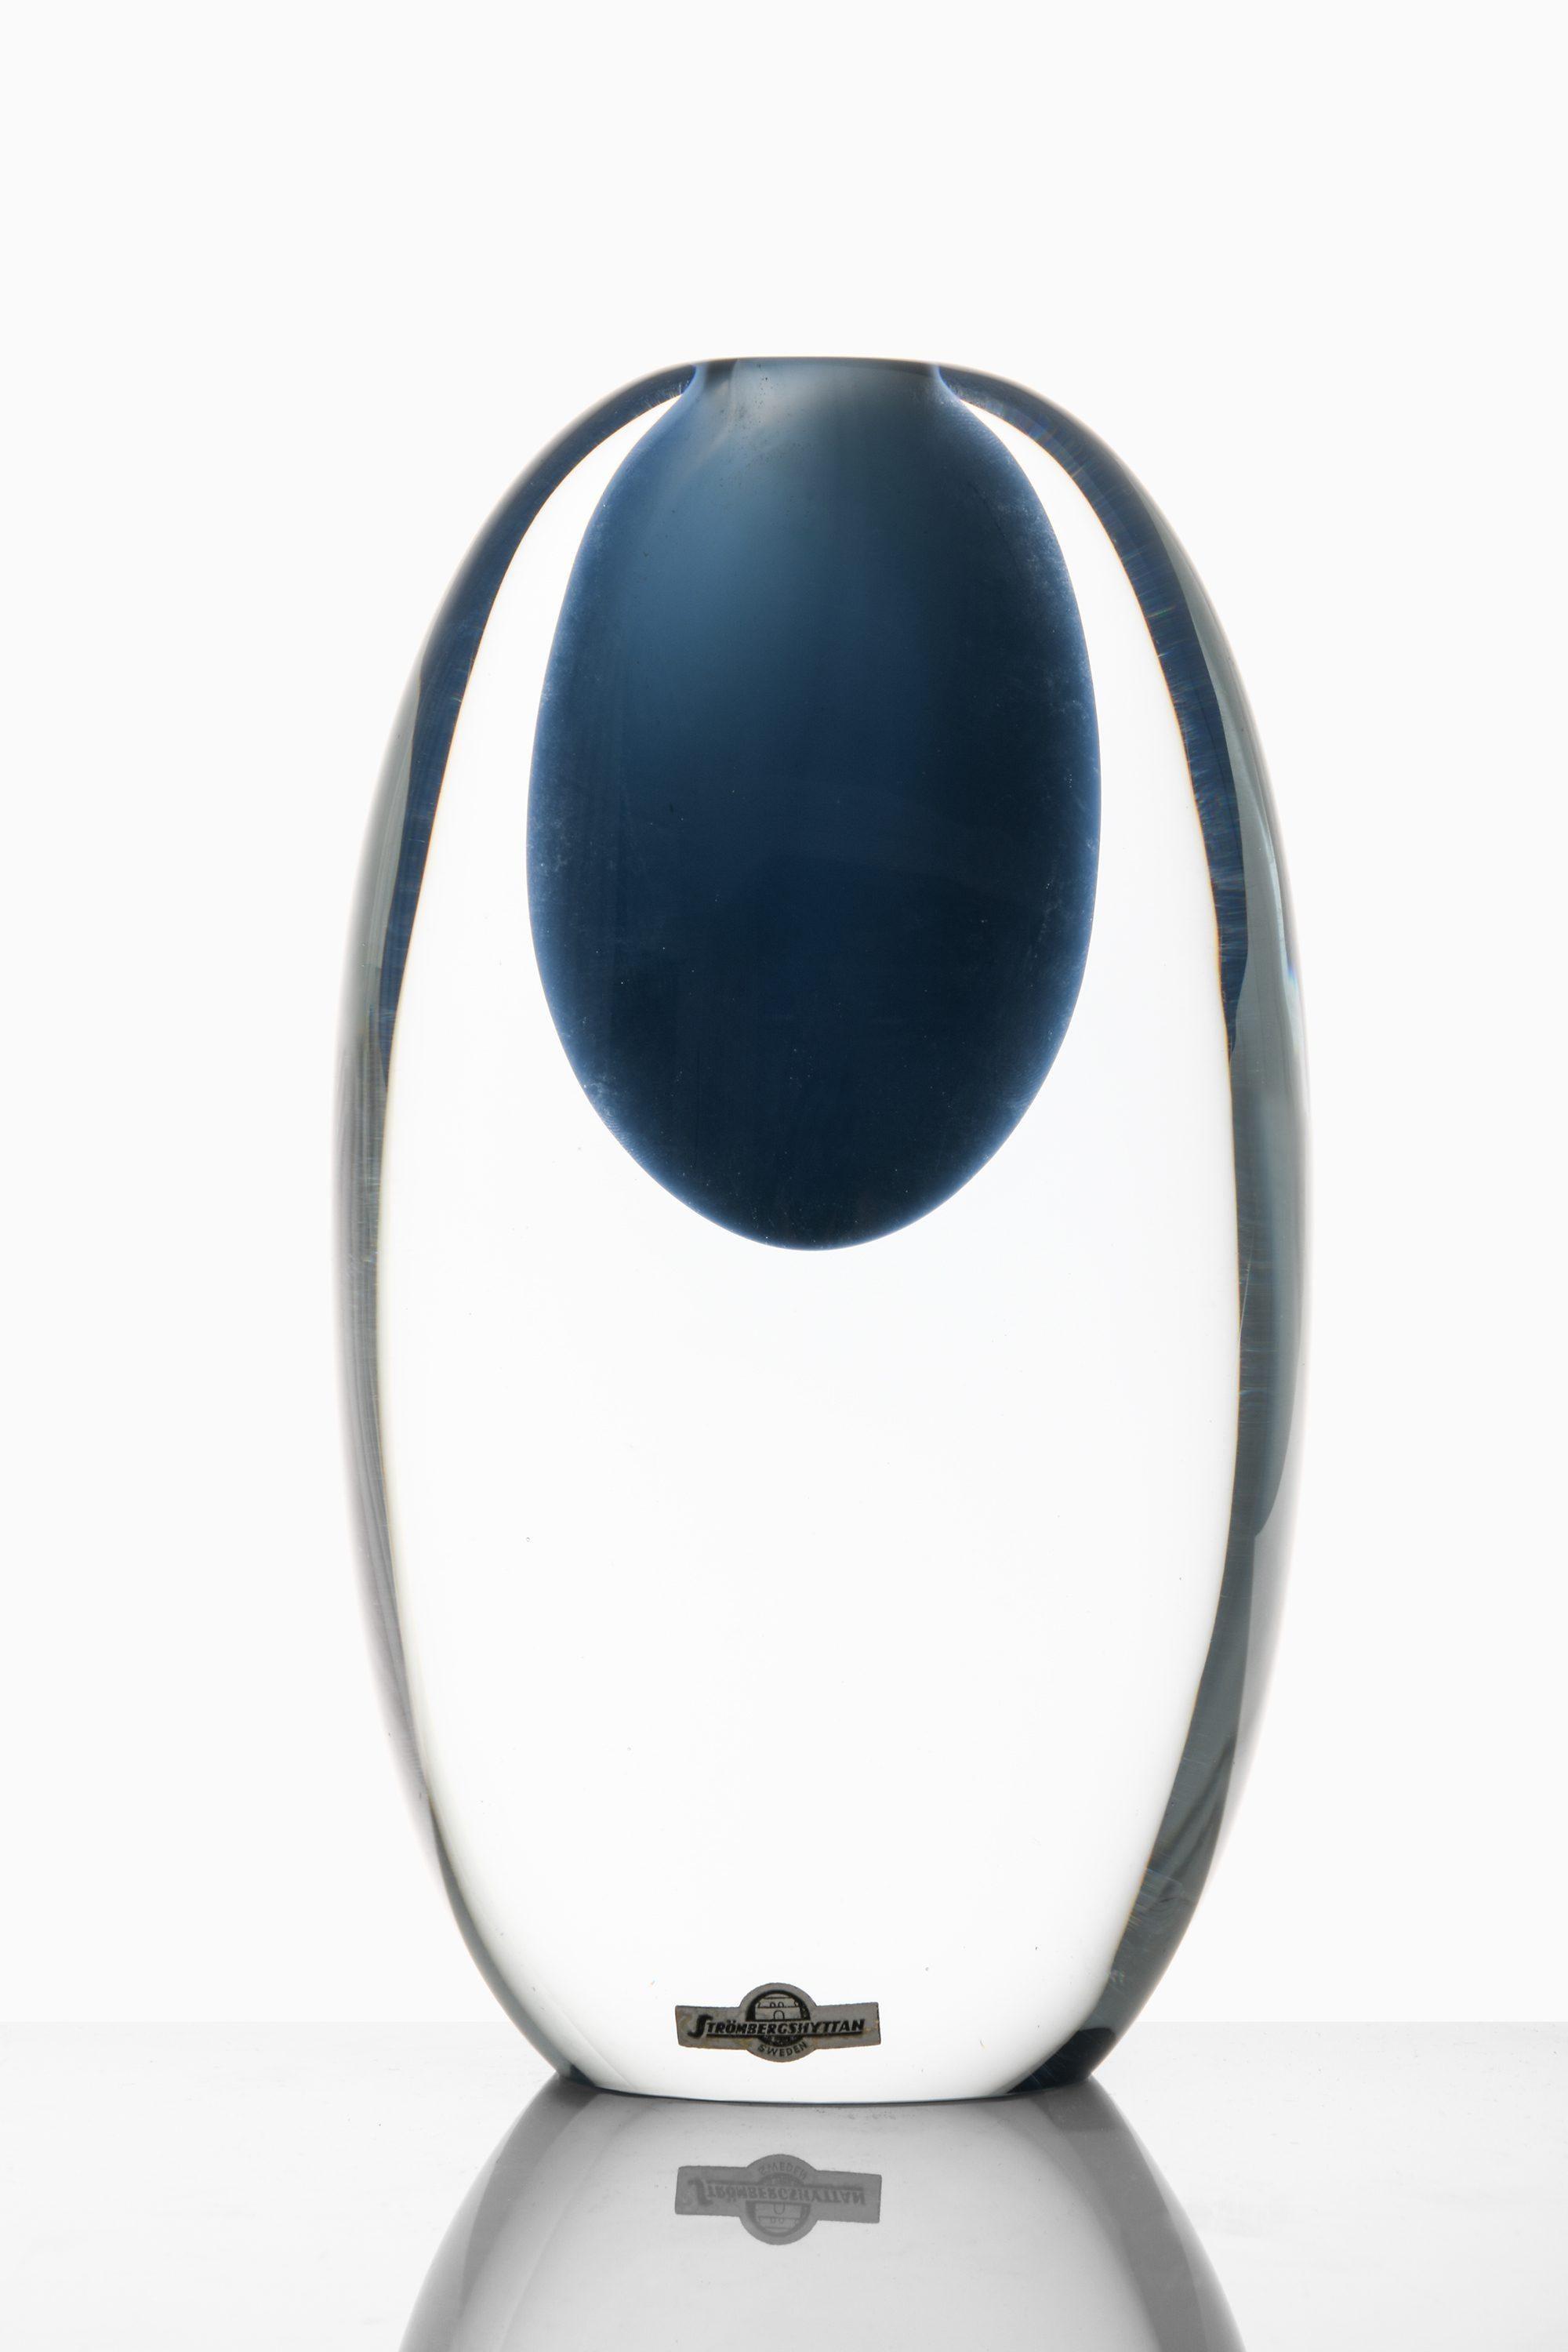 Scandinavian Modern Glass Vase in Blue by Gunnar Nylund, 1950's For Sale